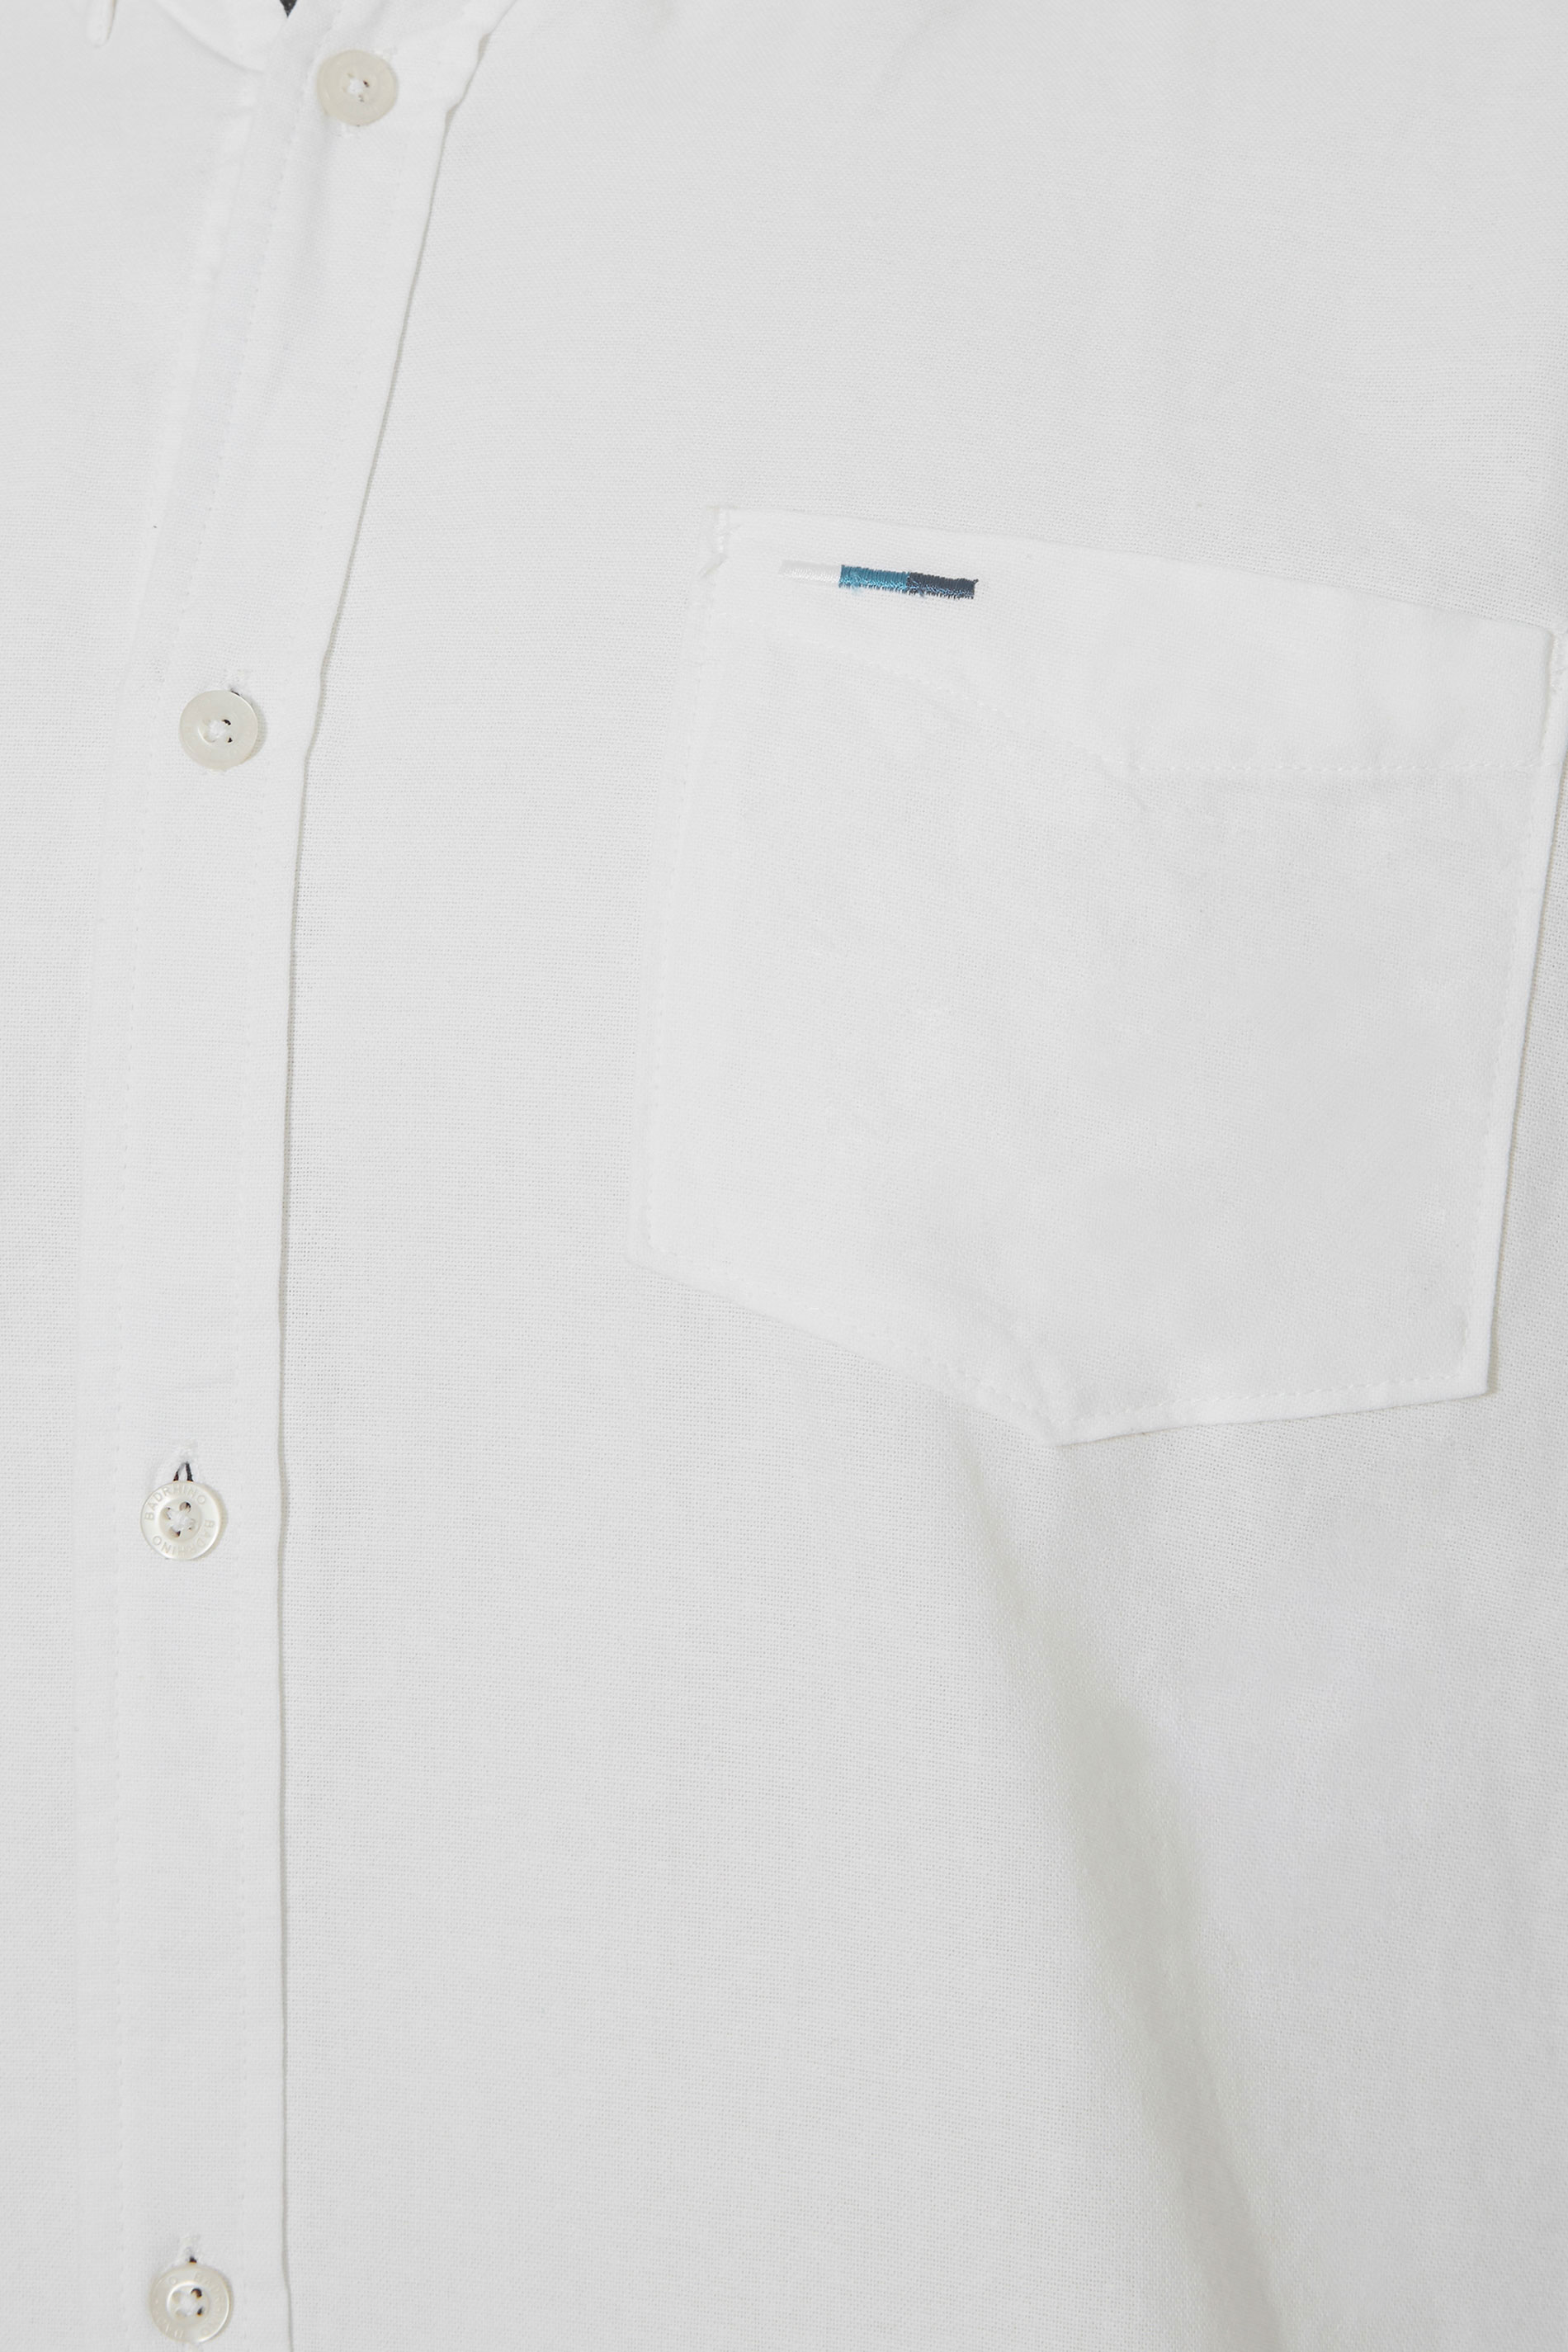 BadRhino White Essential Long Sleeve Oxford Shirt | BadRhino 2